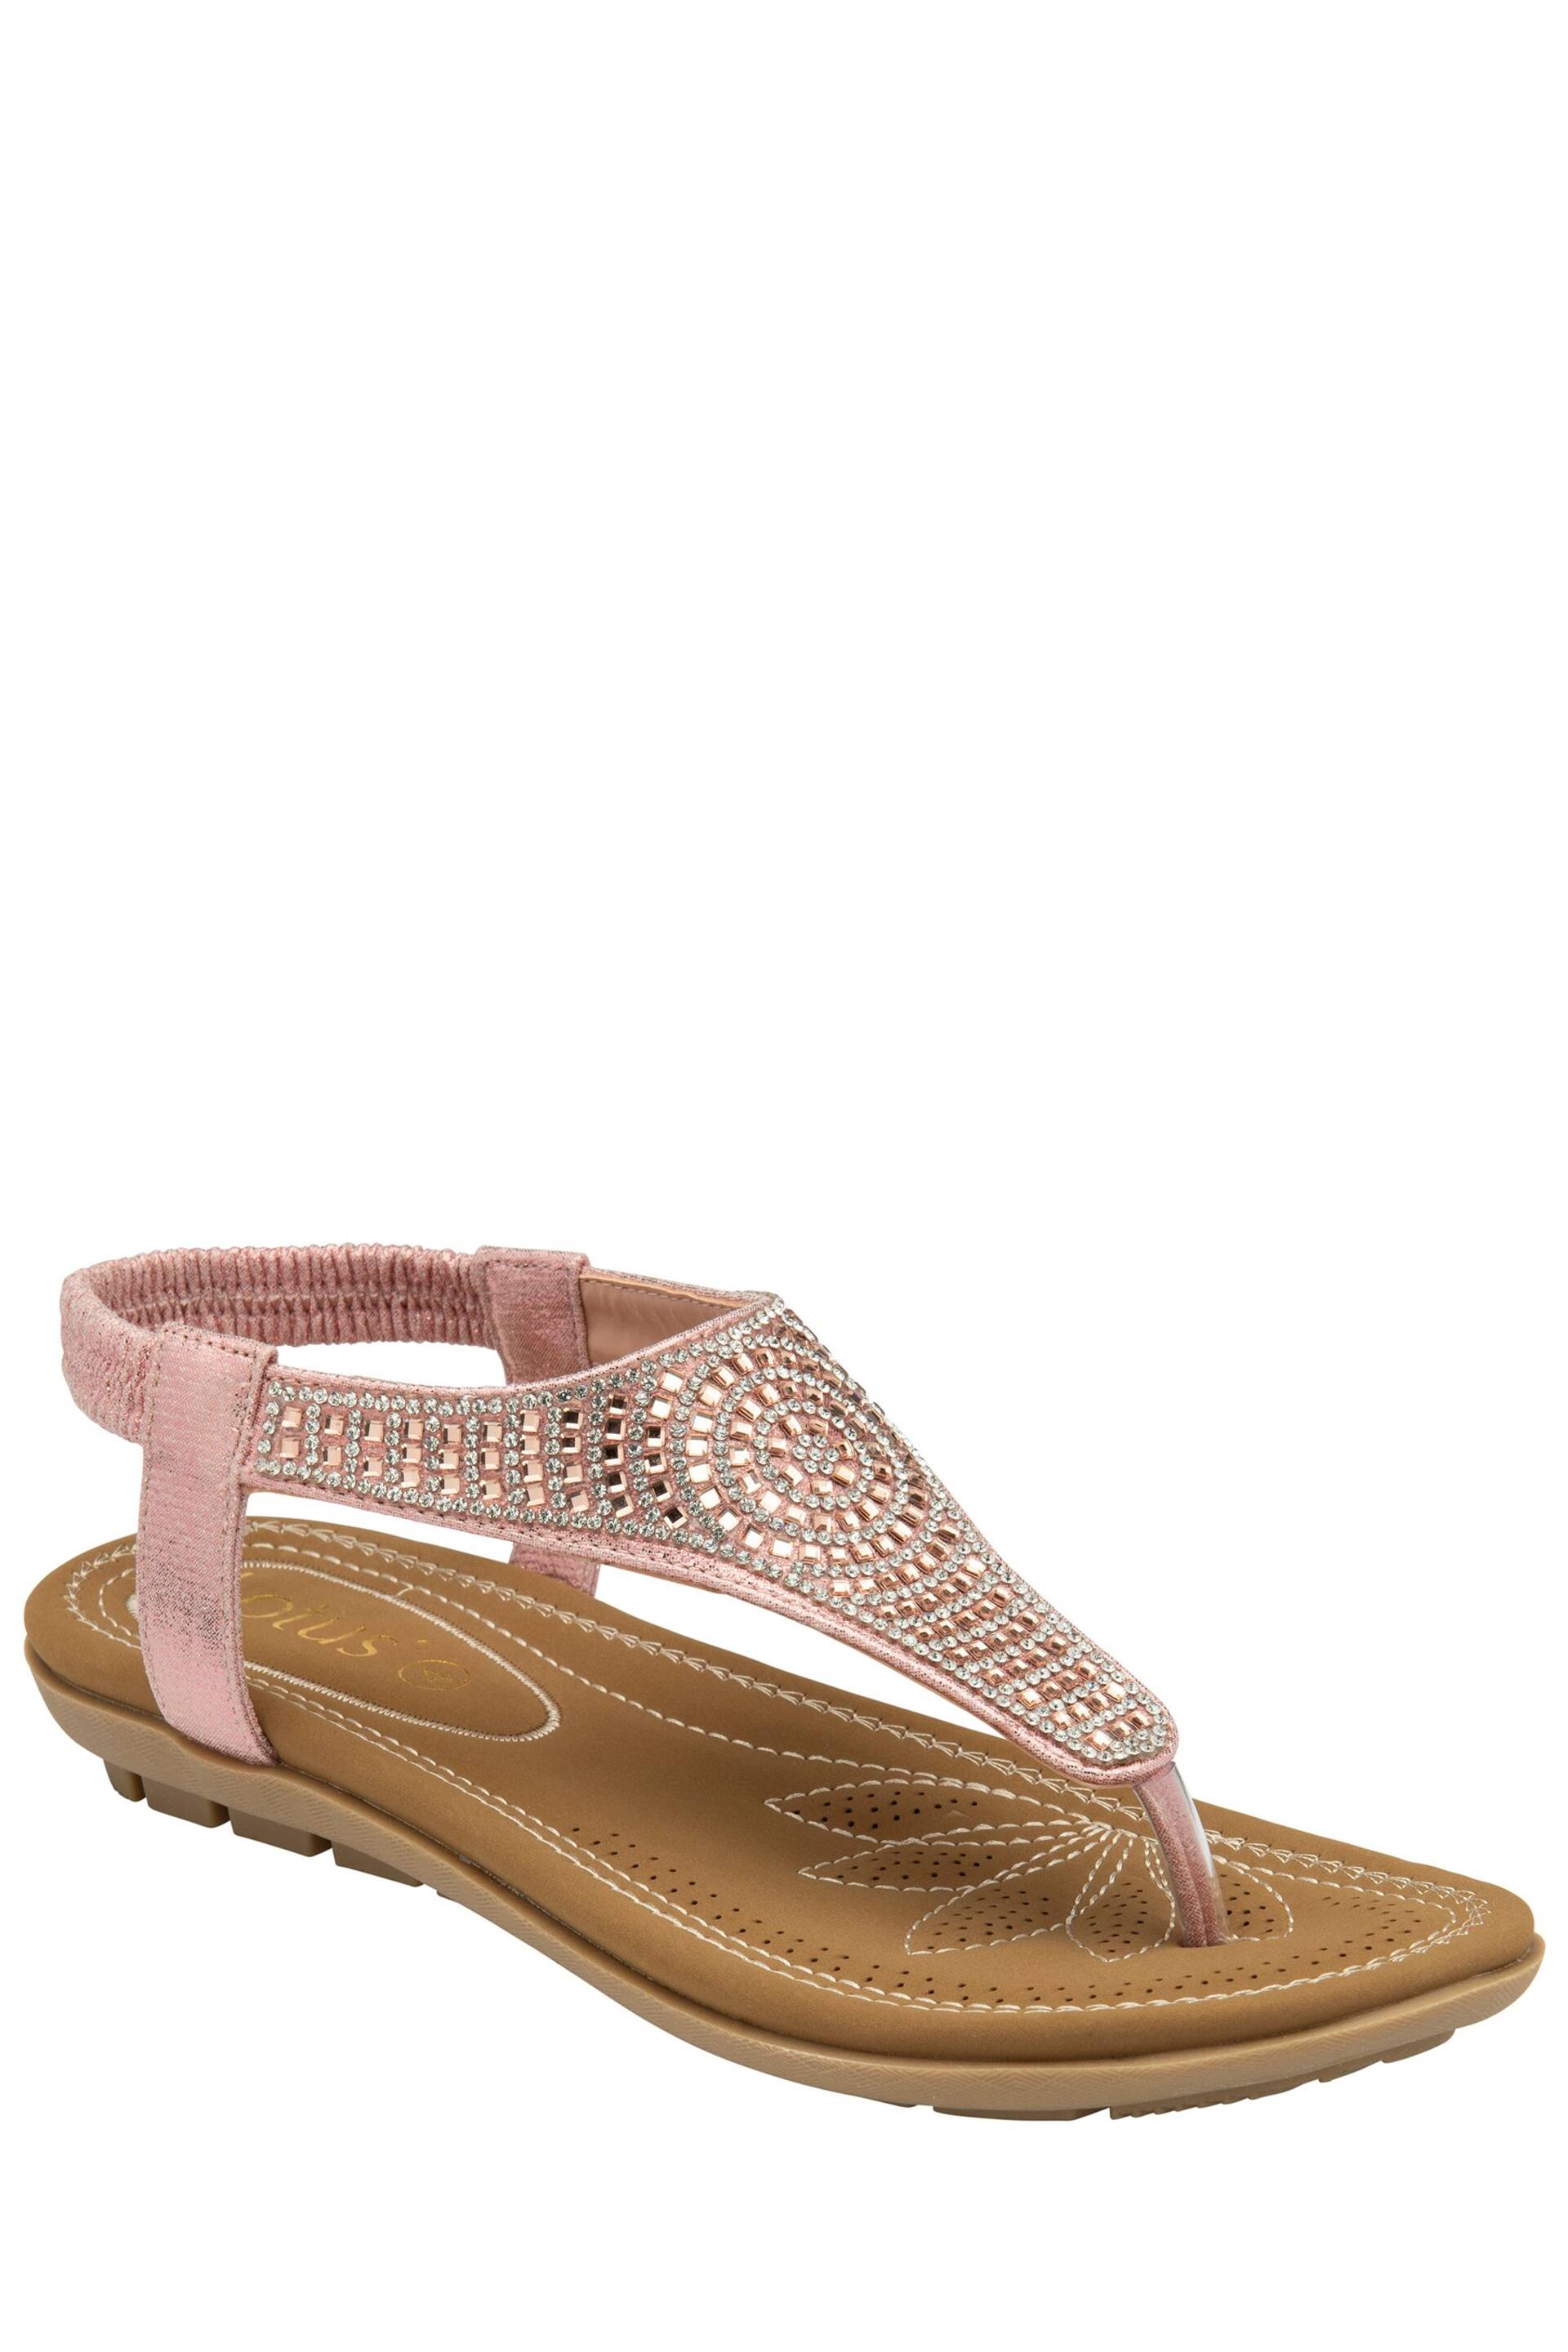 Lotus Pink Toe-Post Sandals - Image 1 of 4